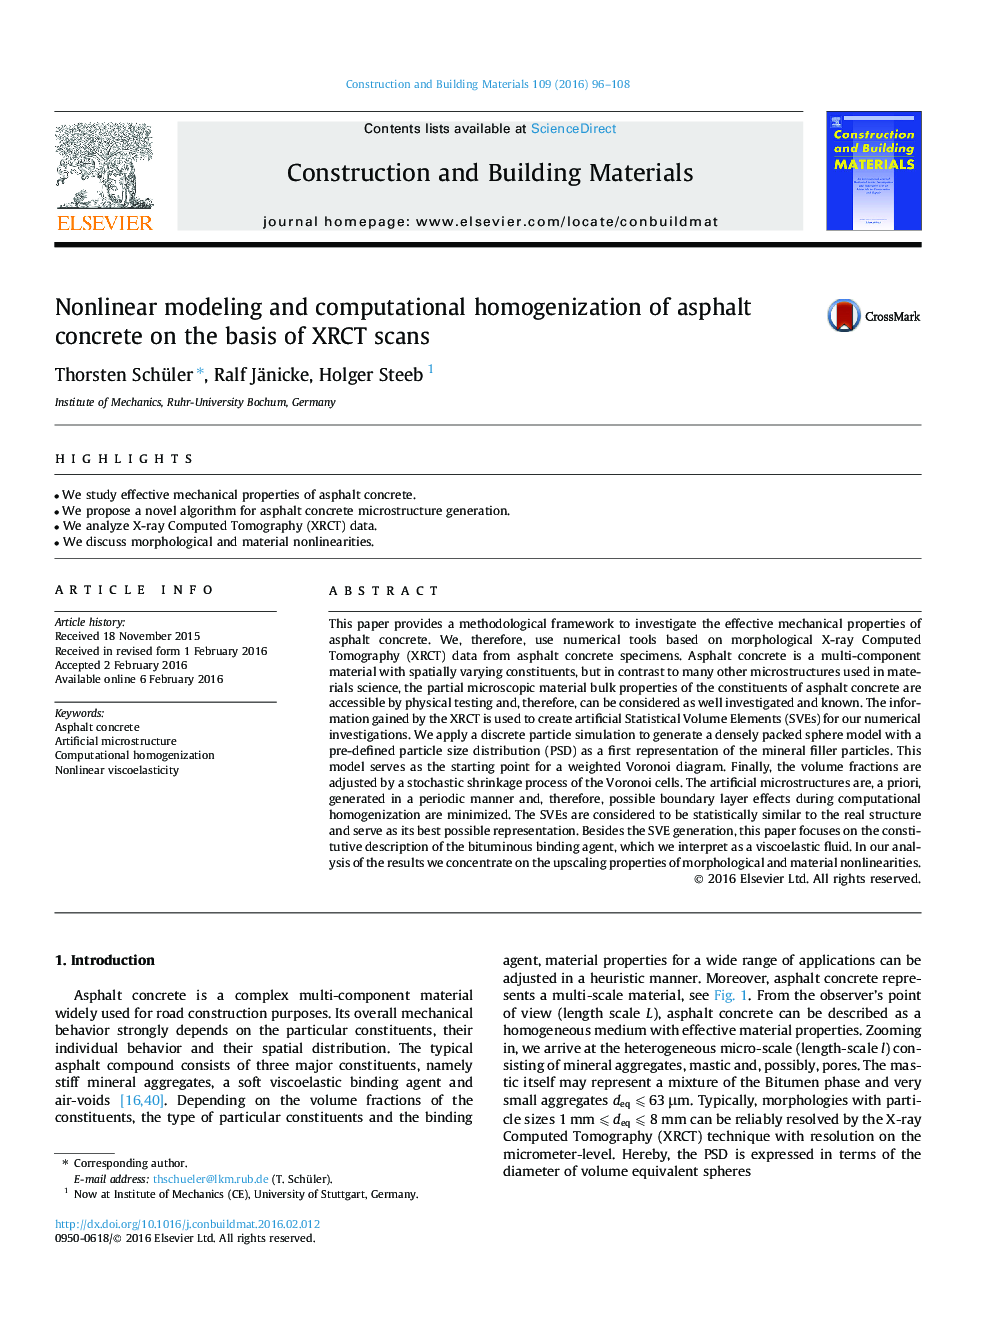 Nonlinear modeling and computational homogenization of asphalt concrete on the basis of XRCT scans